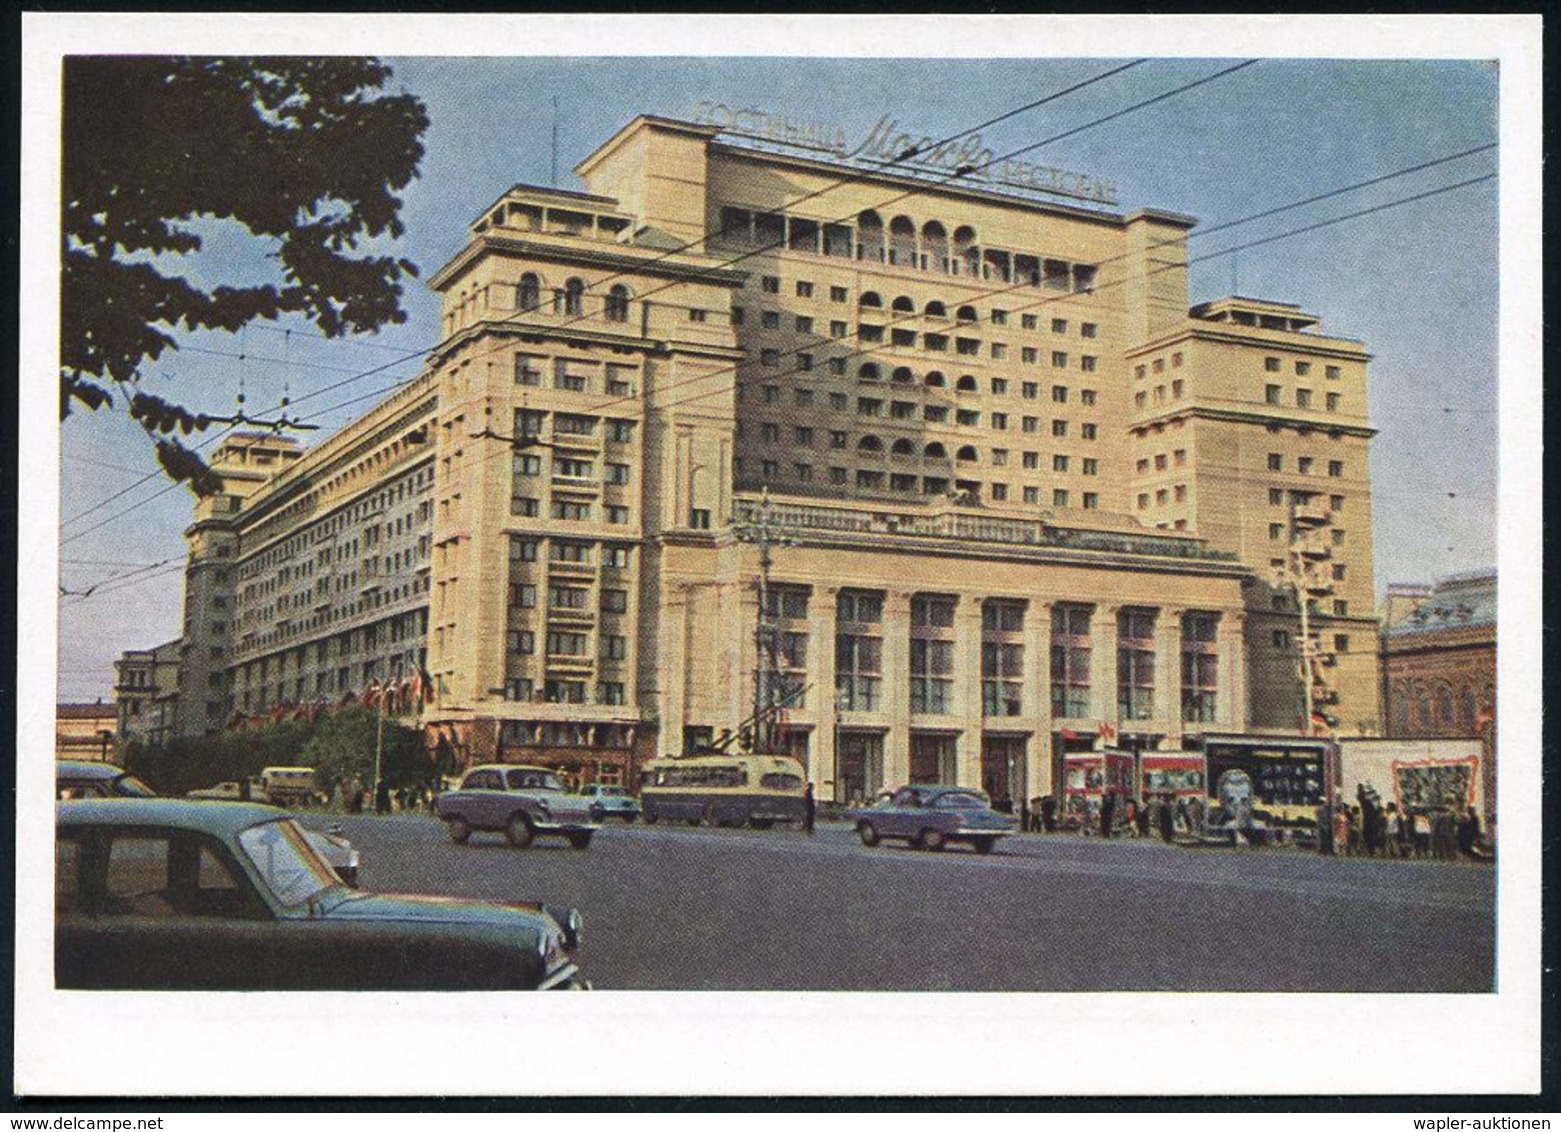 OMNIBUS / OMNIBUS-HERSTELLER : UdSSR 1963 3 Kop. BiP Rakete, Grün: MOSKAU, Hotel "Moskau" Mit Trolleybus U. Fahrdrähten  - Busses